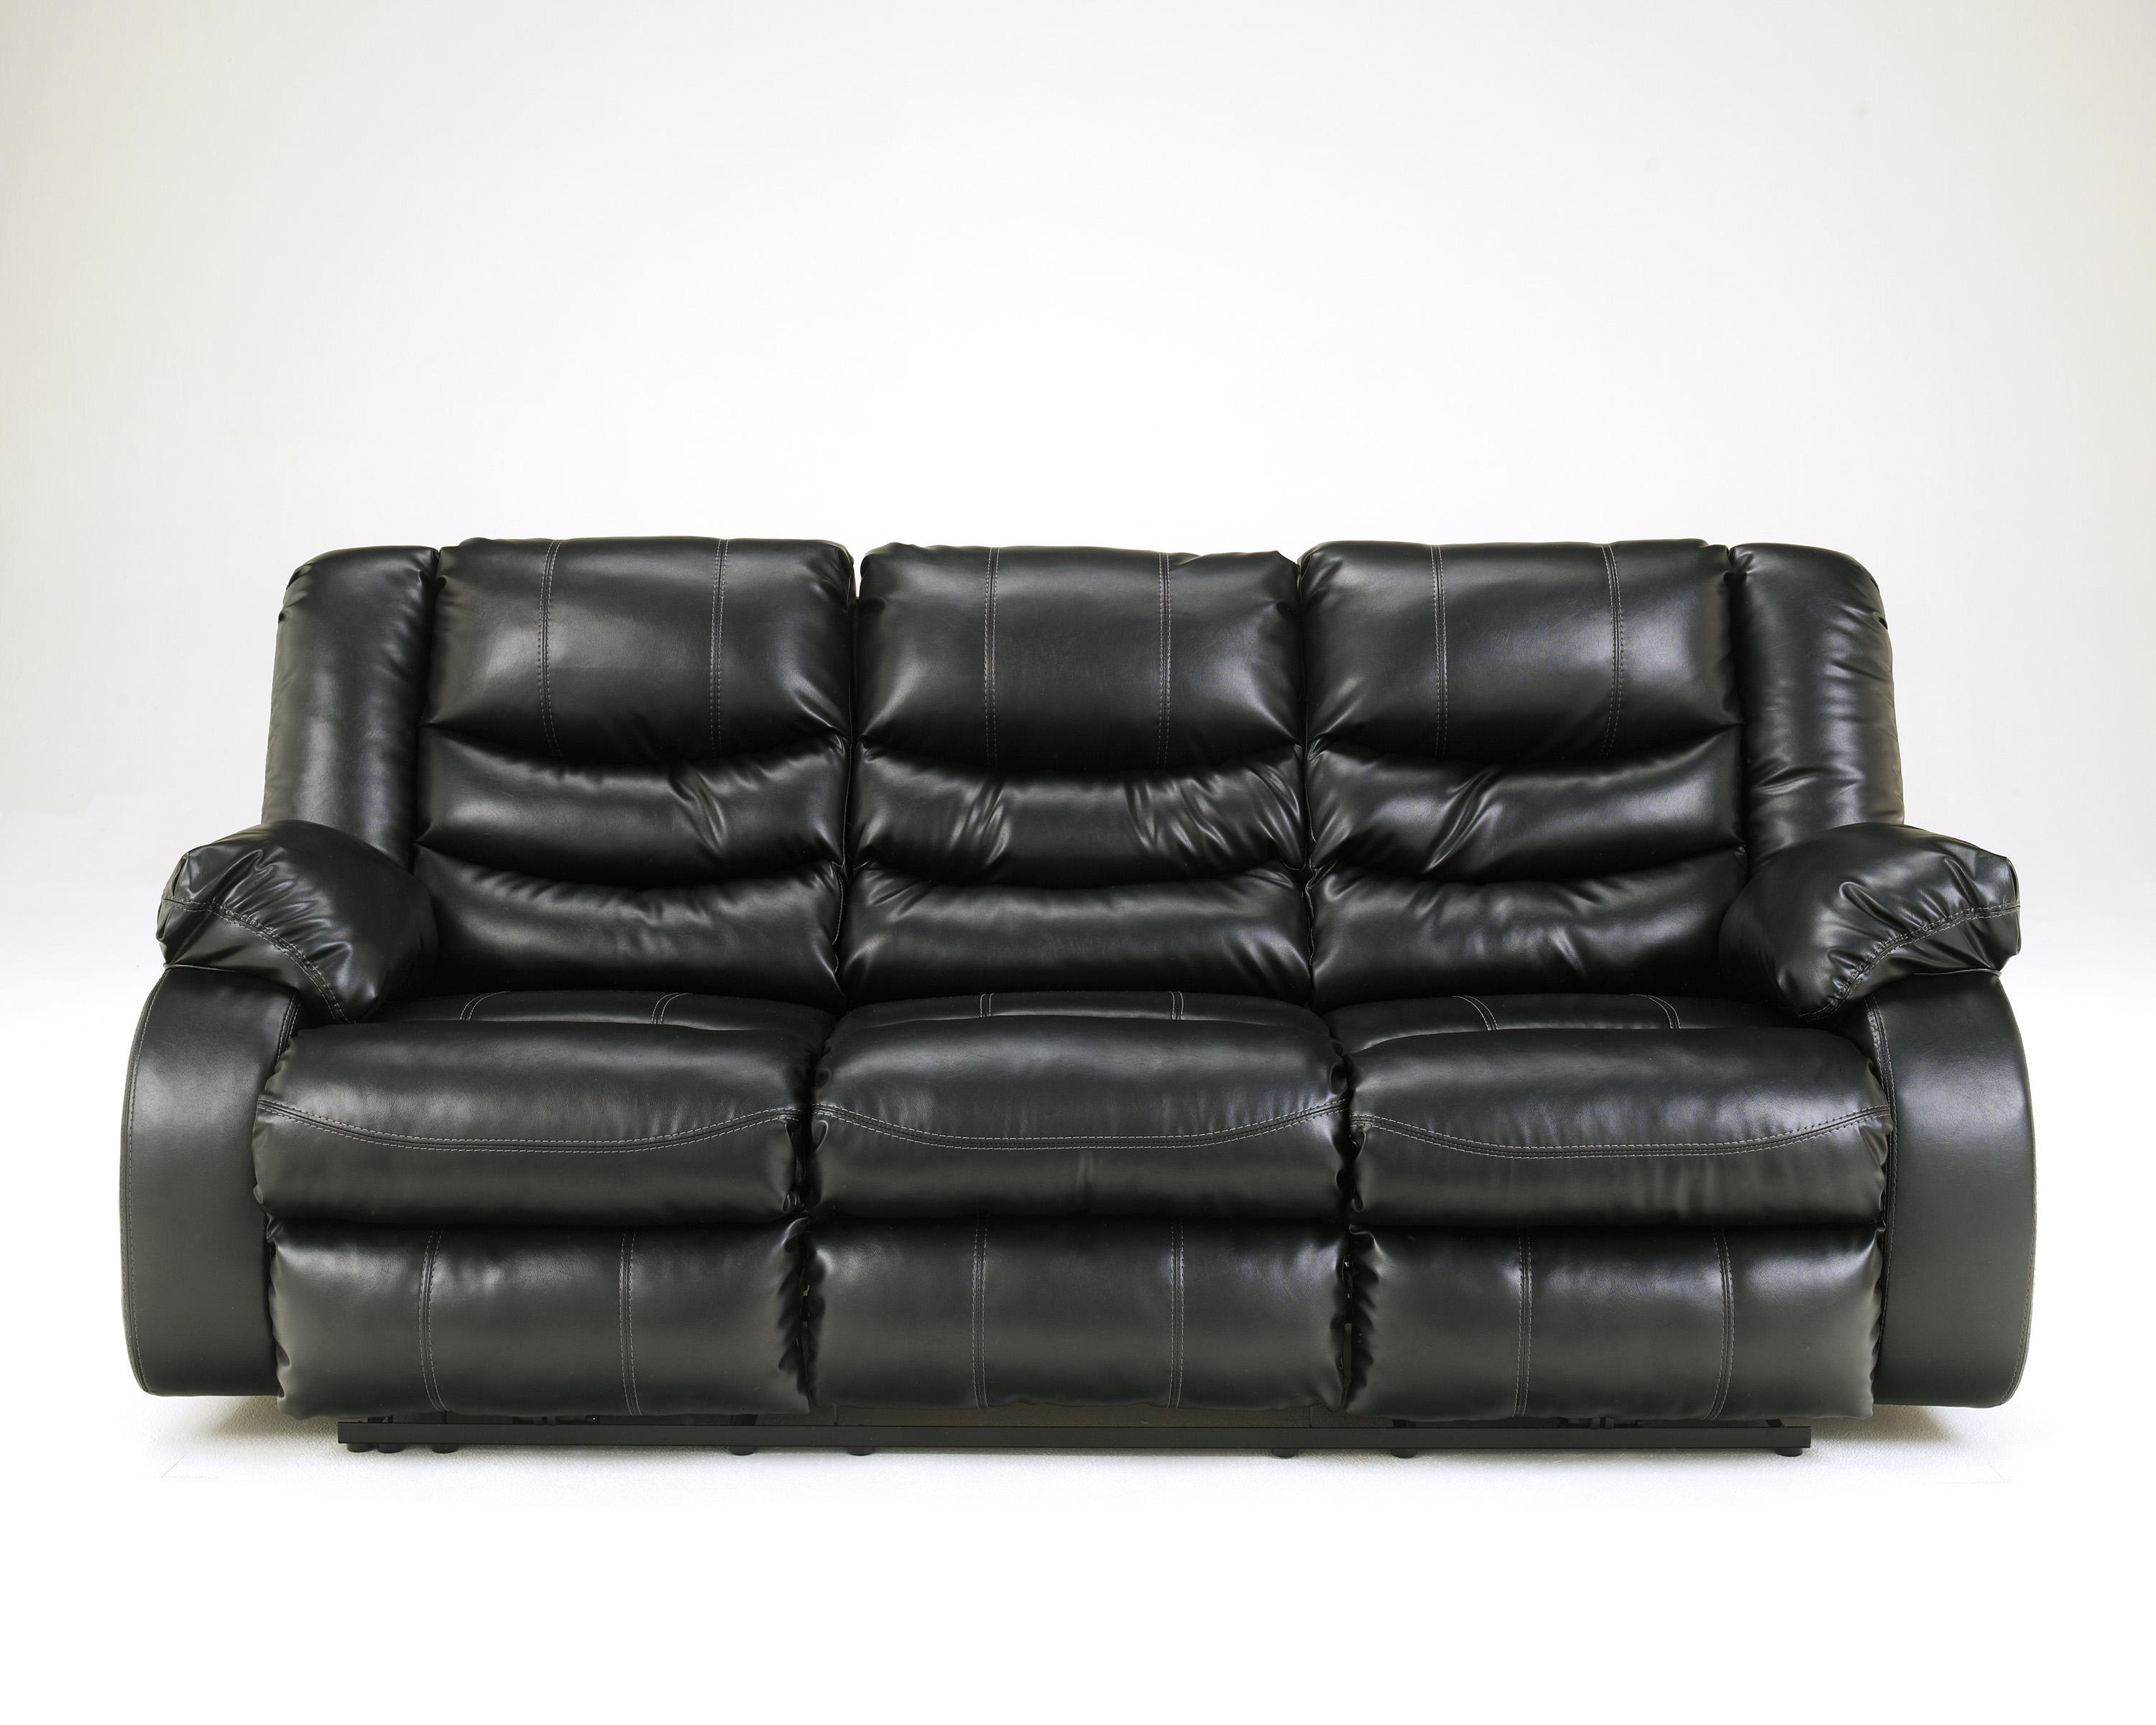 

    
Ashley Linebacker DuraBlend 2 Piece Living Room Set in Black 2167
